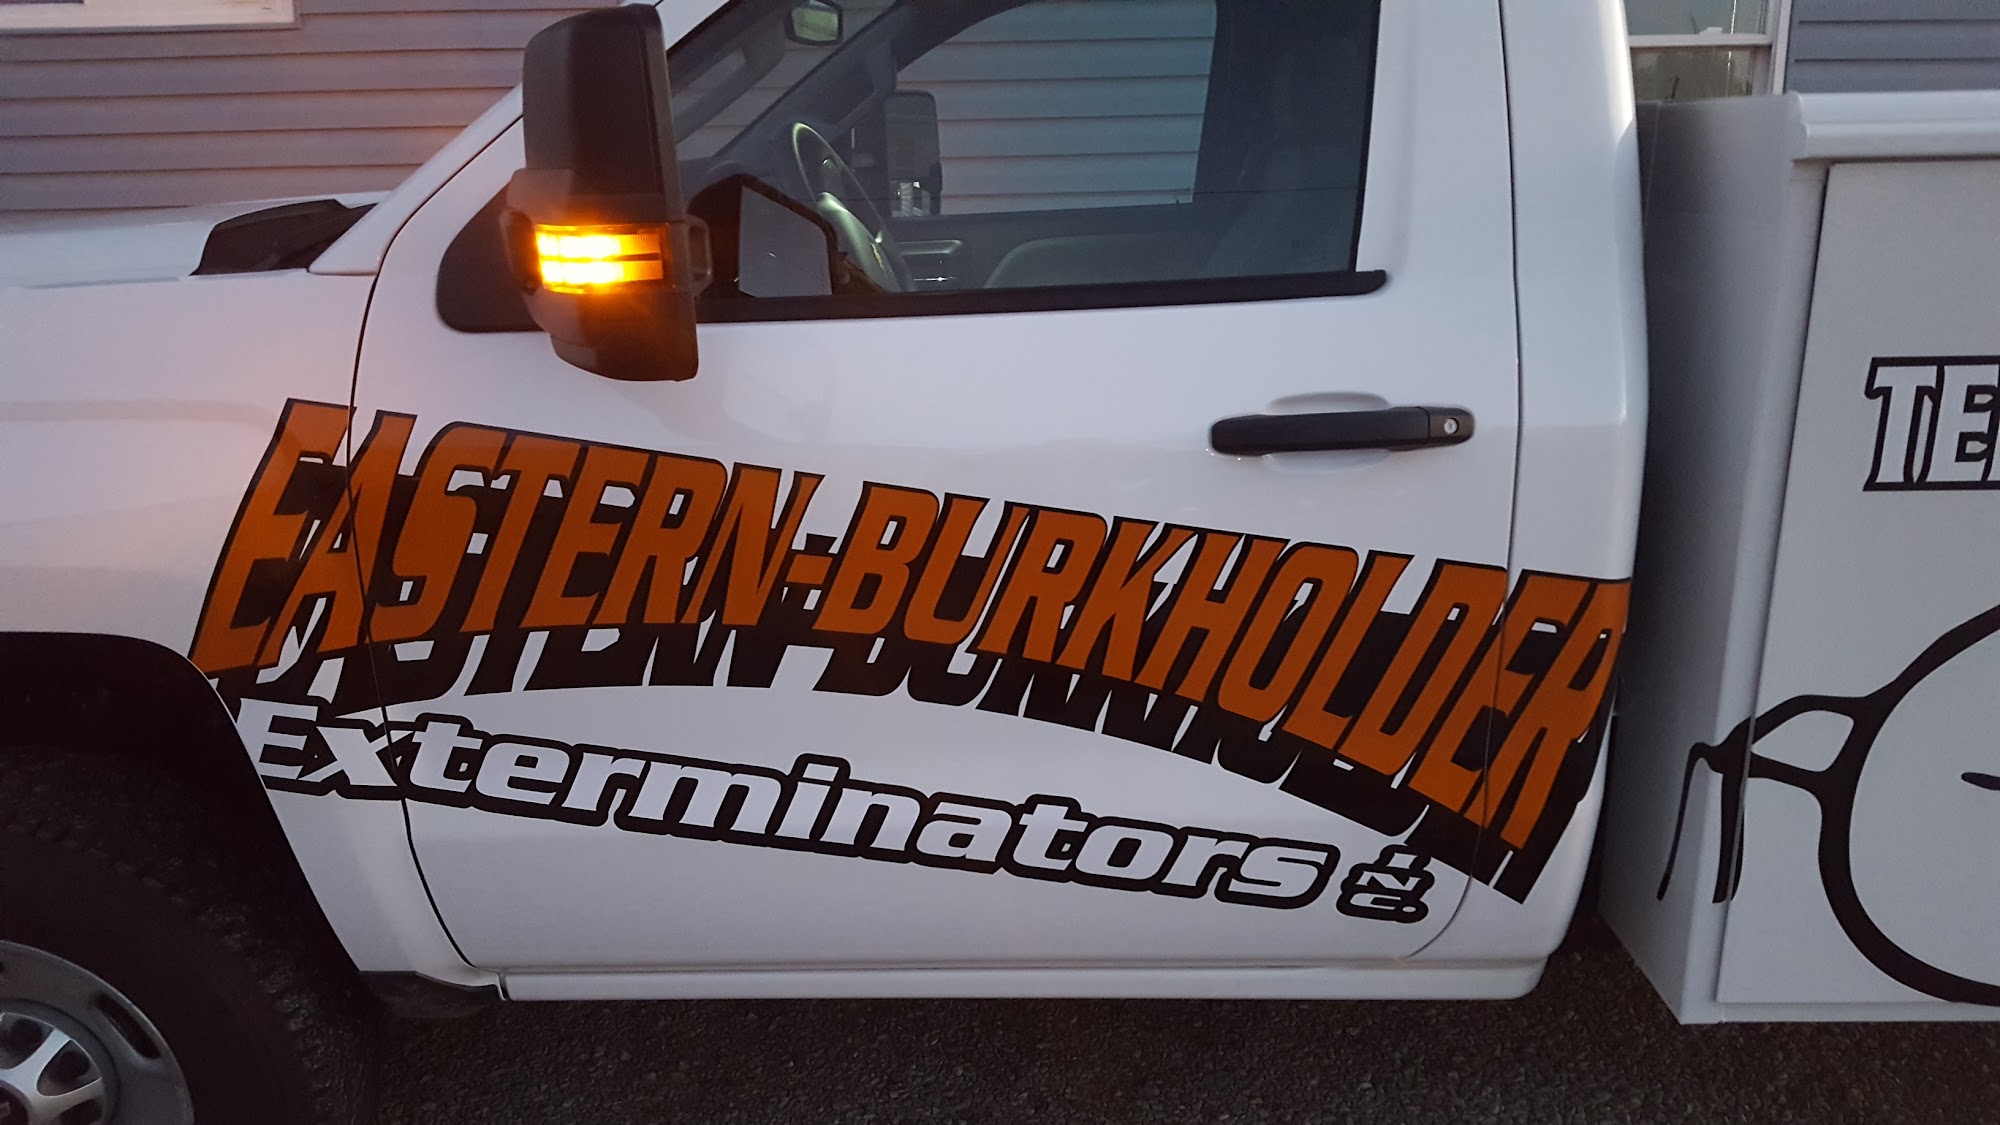 Eastern-Burkholder Exterminators Inc